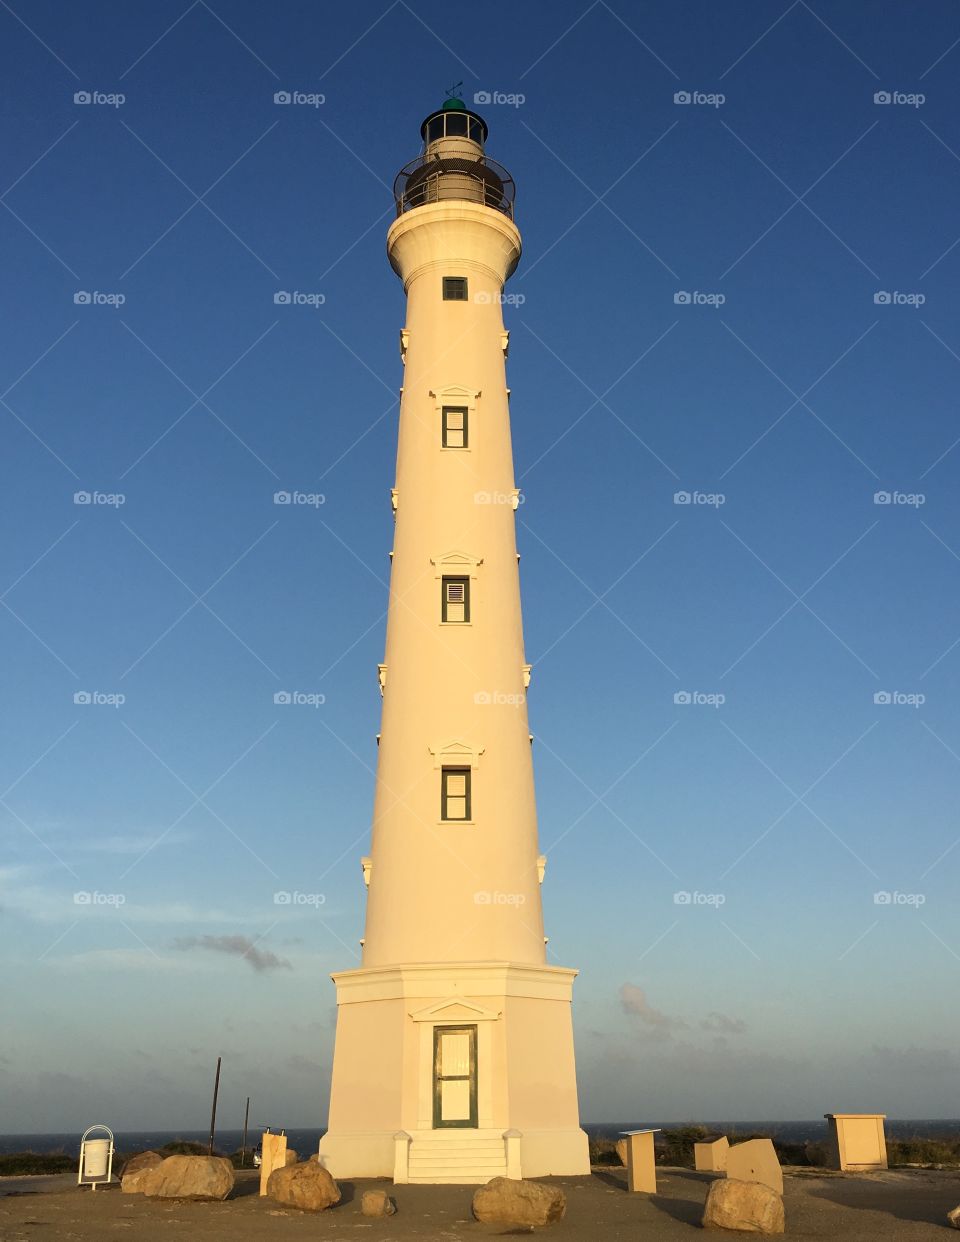 California Lighthouse in Aruba.